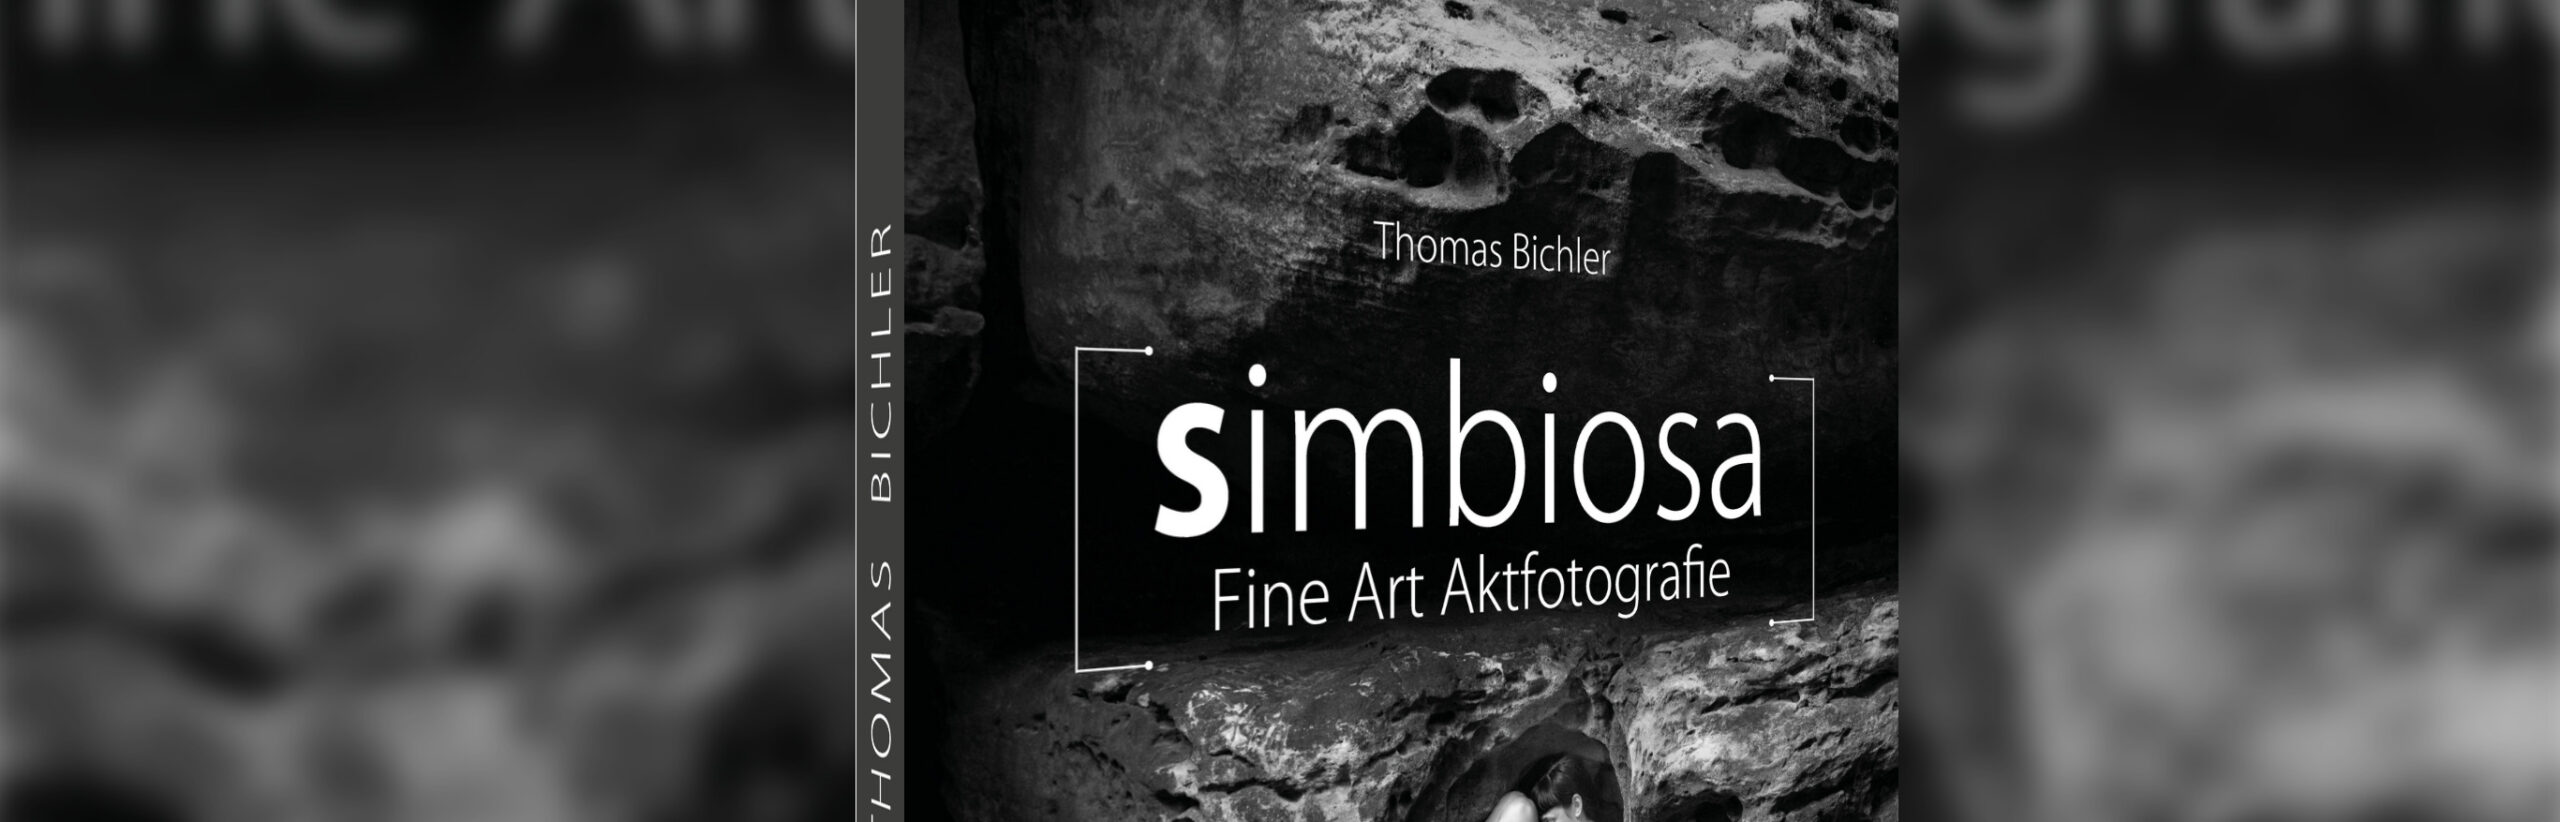 simbiosa – Thomas Bichler